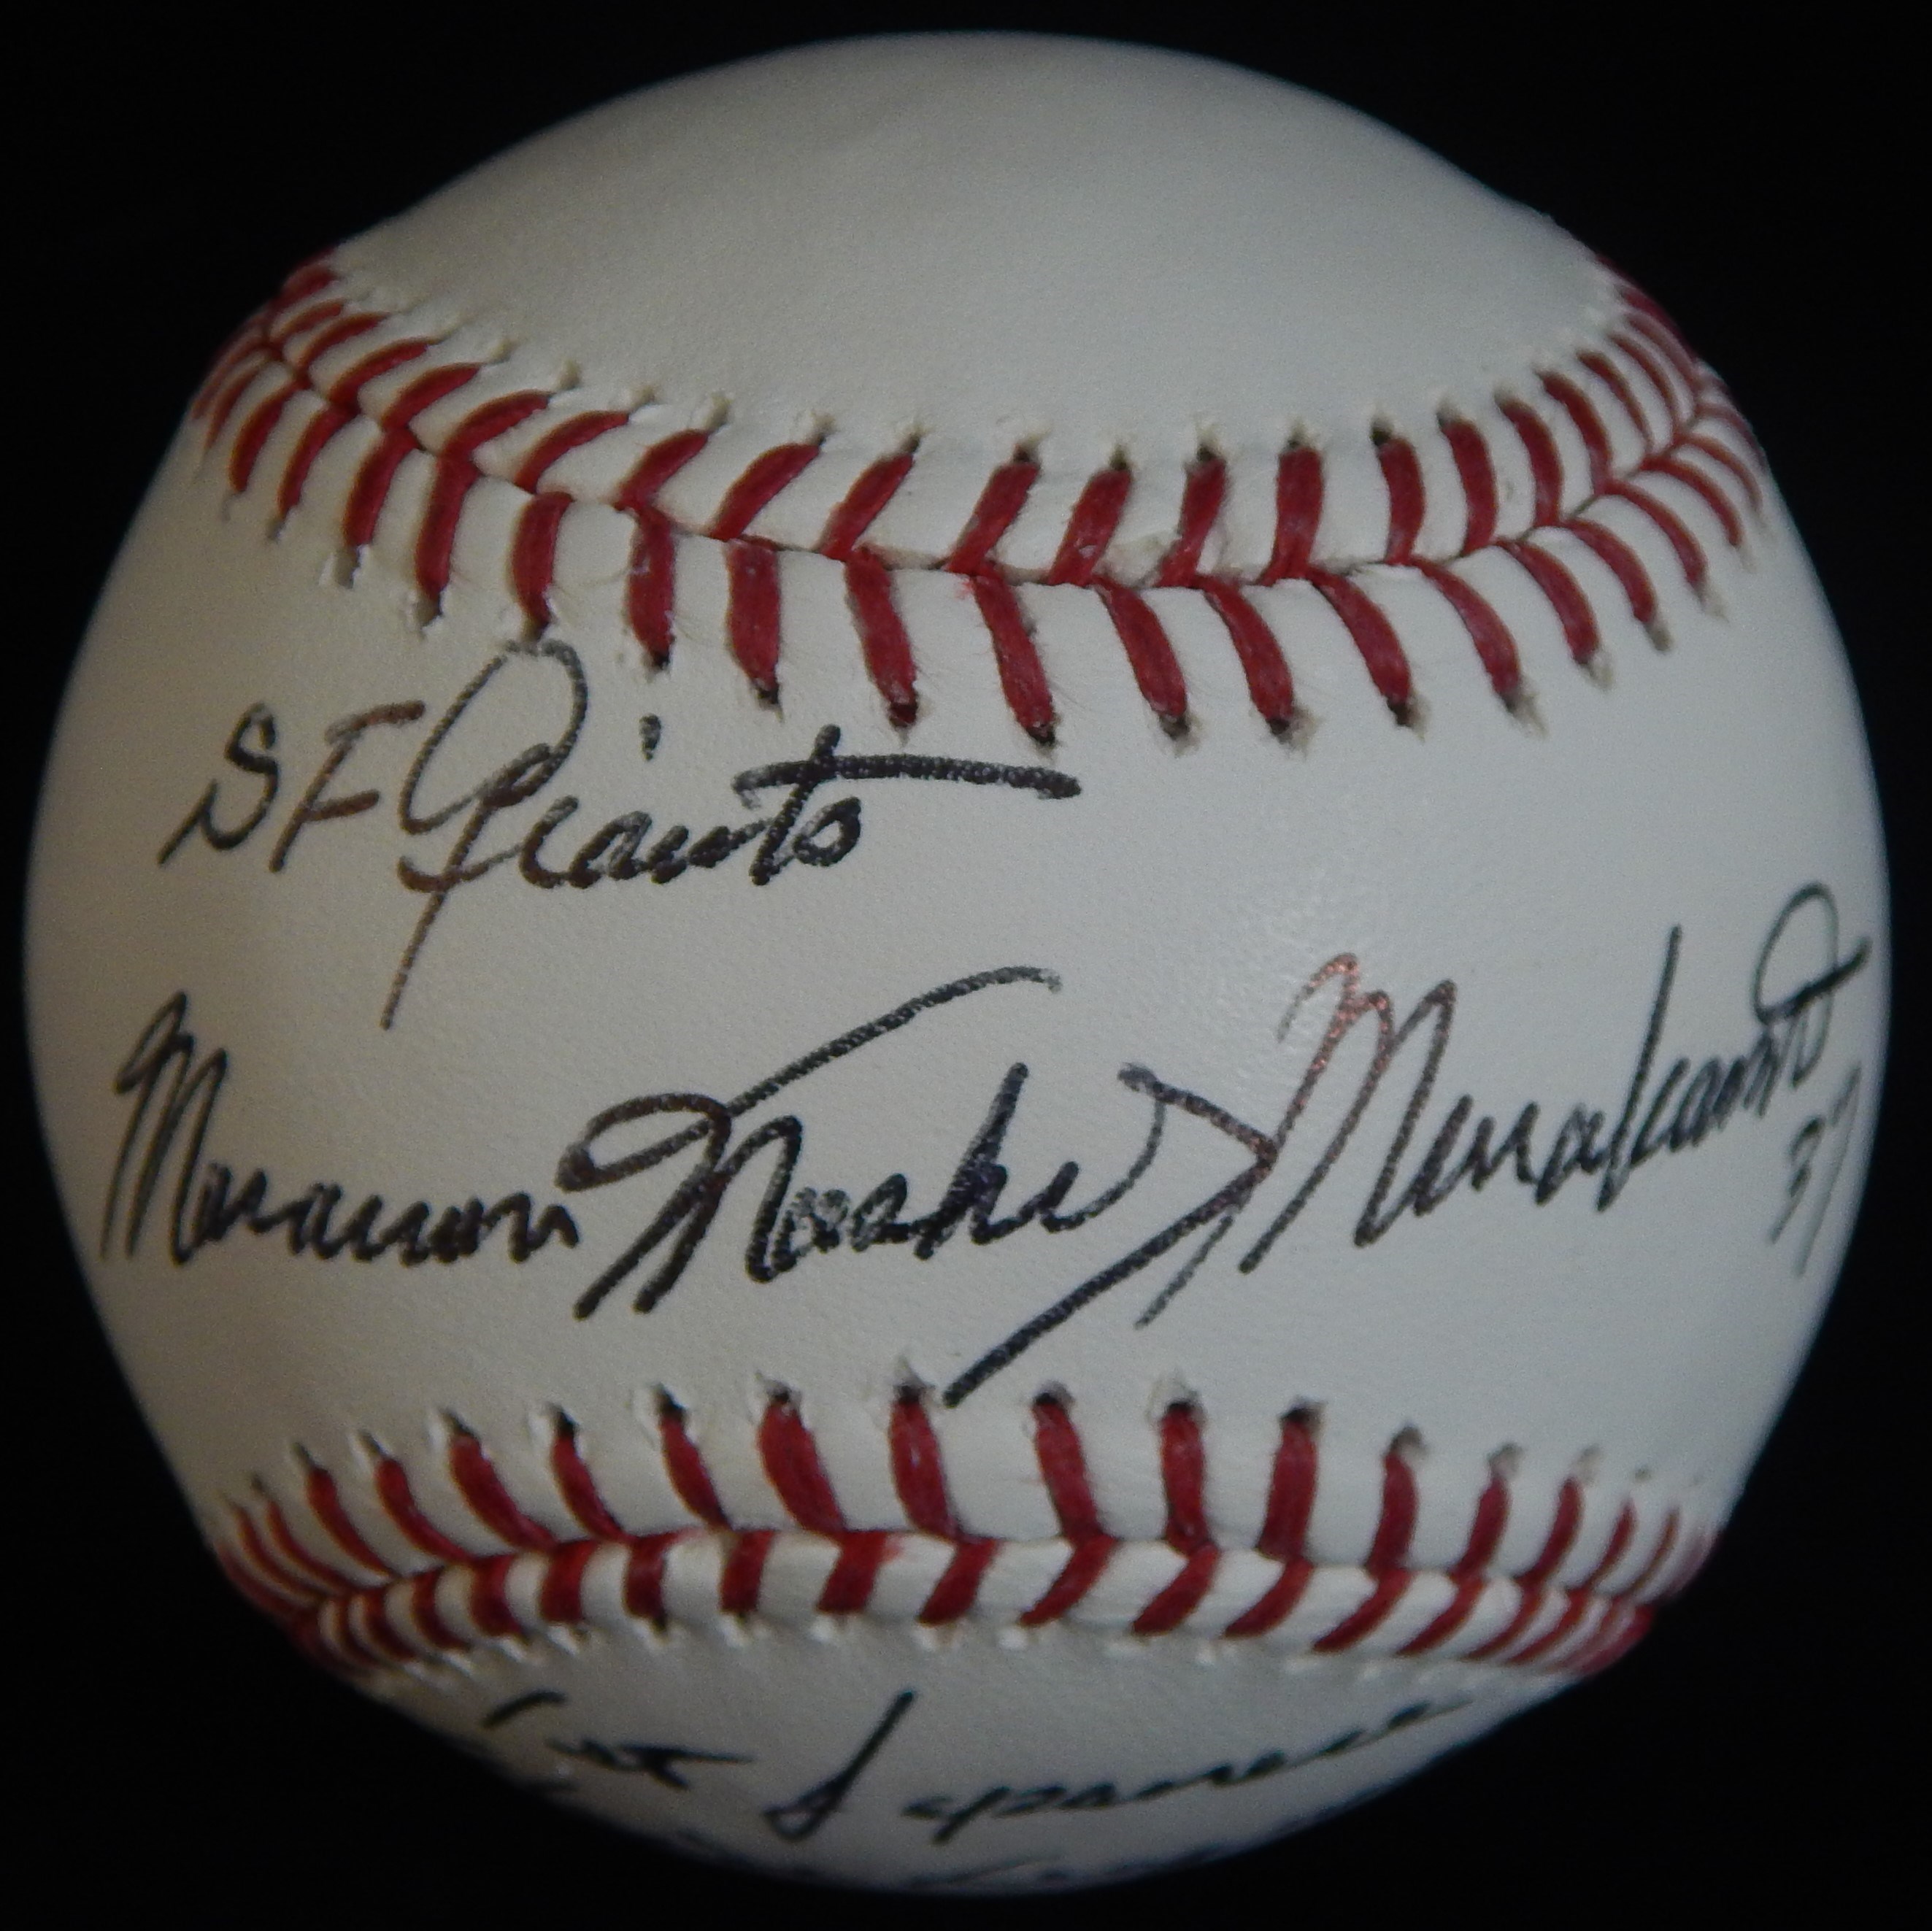 - Masanori Murakami Single Signed Baseball with Inscriptions